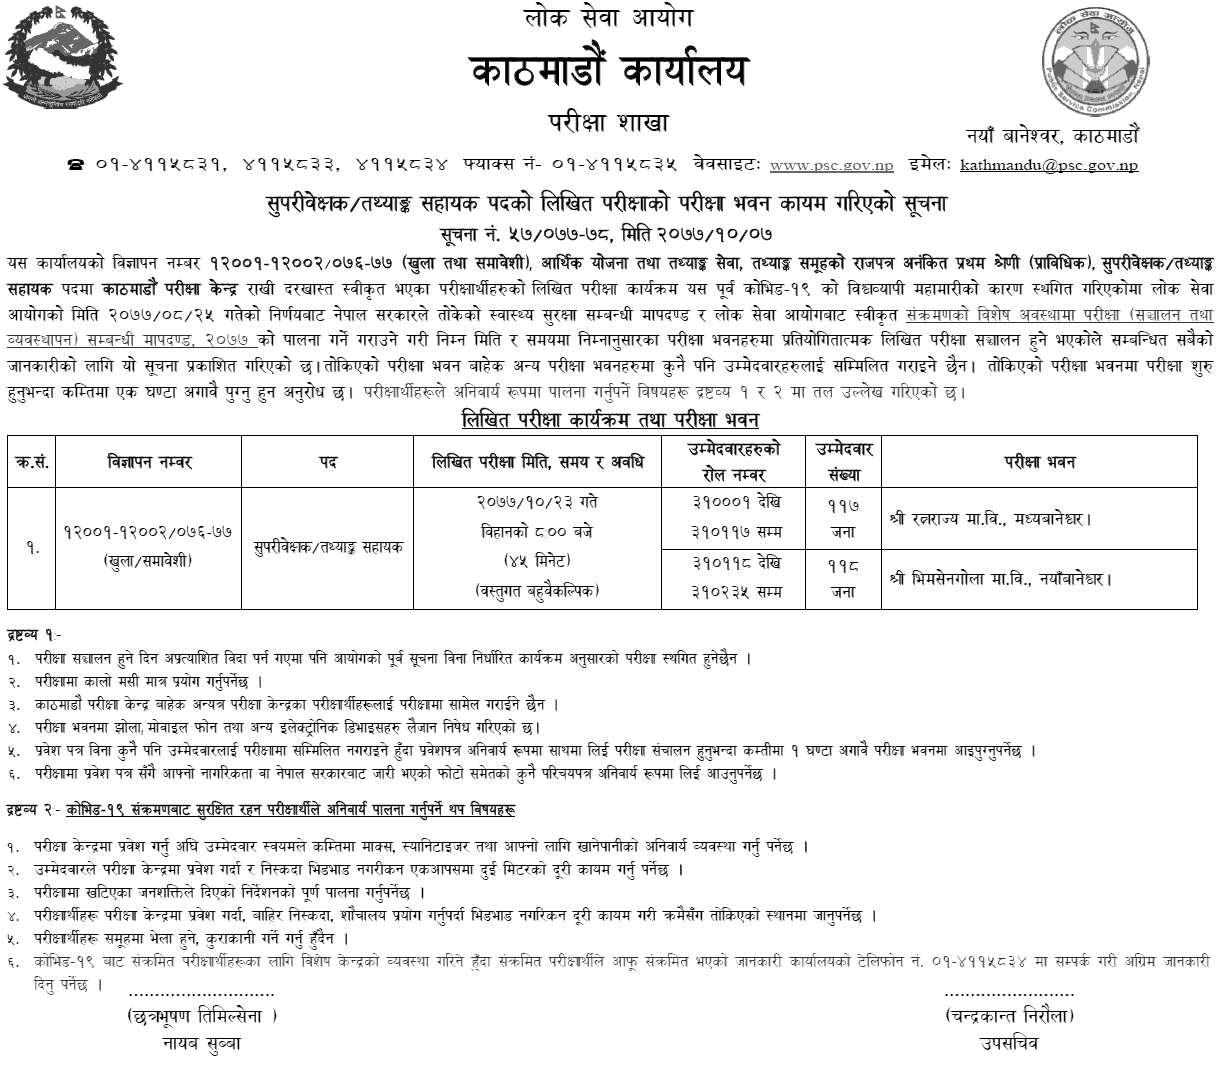 Supervisor, Statistics Assistant (Nayab Subaa Technical) Post Written Exam Center Kathmandu